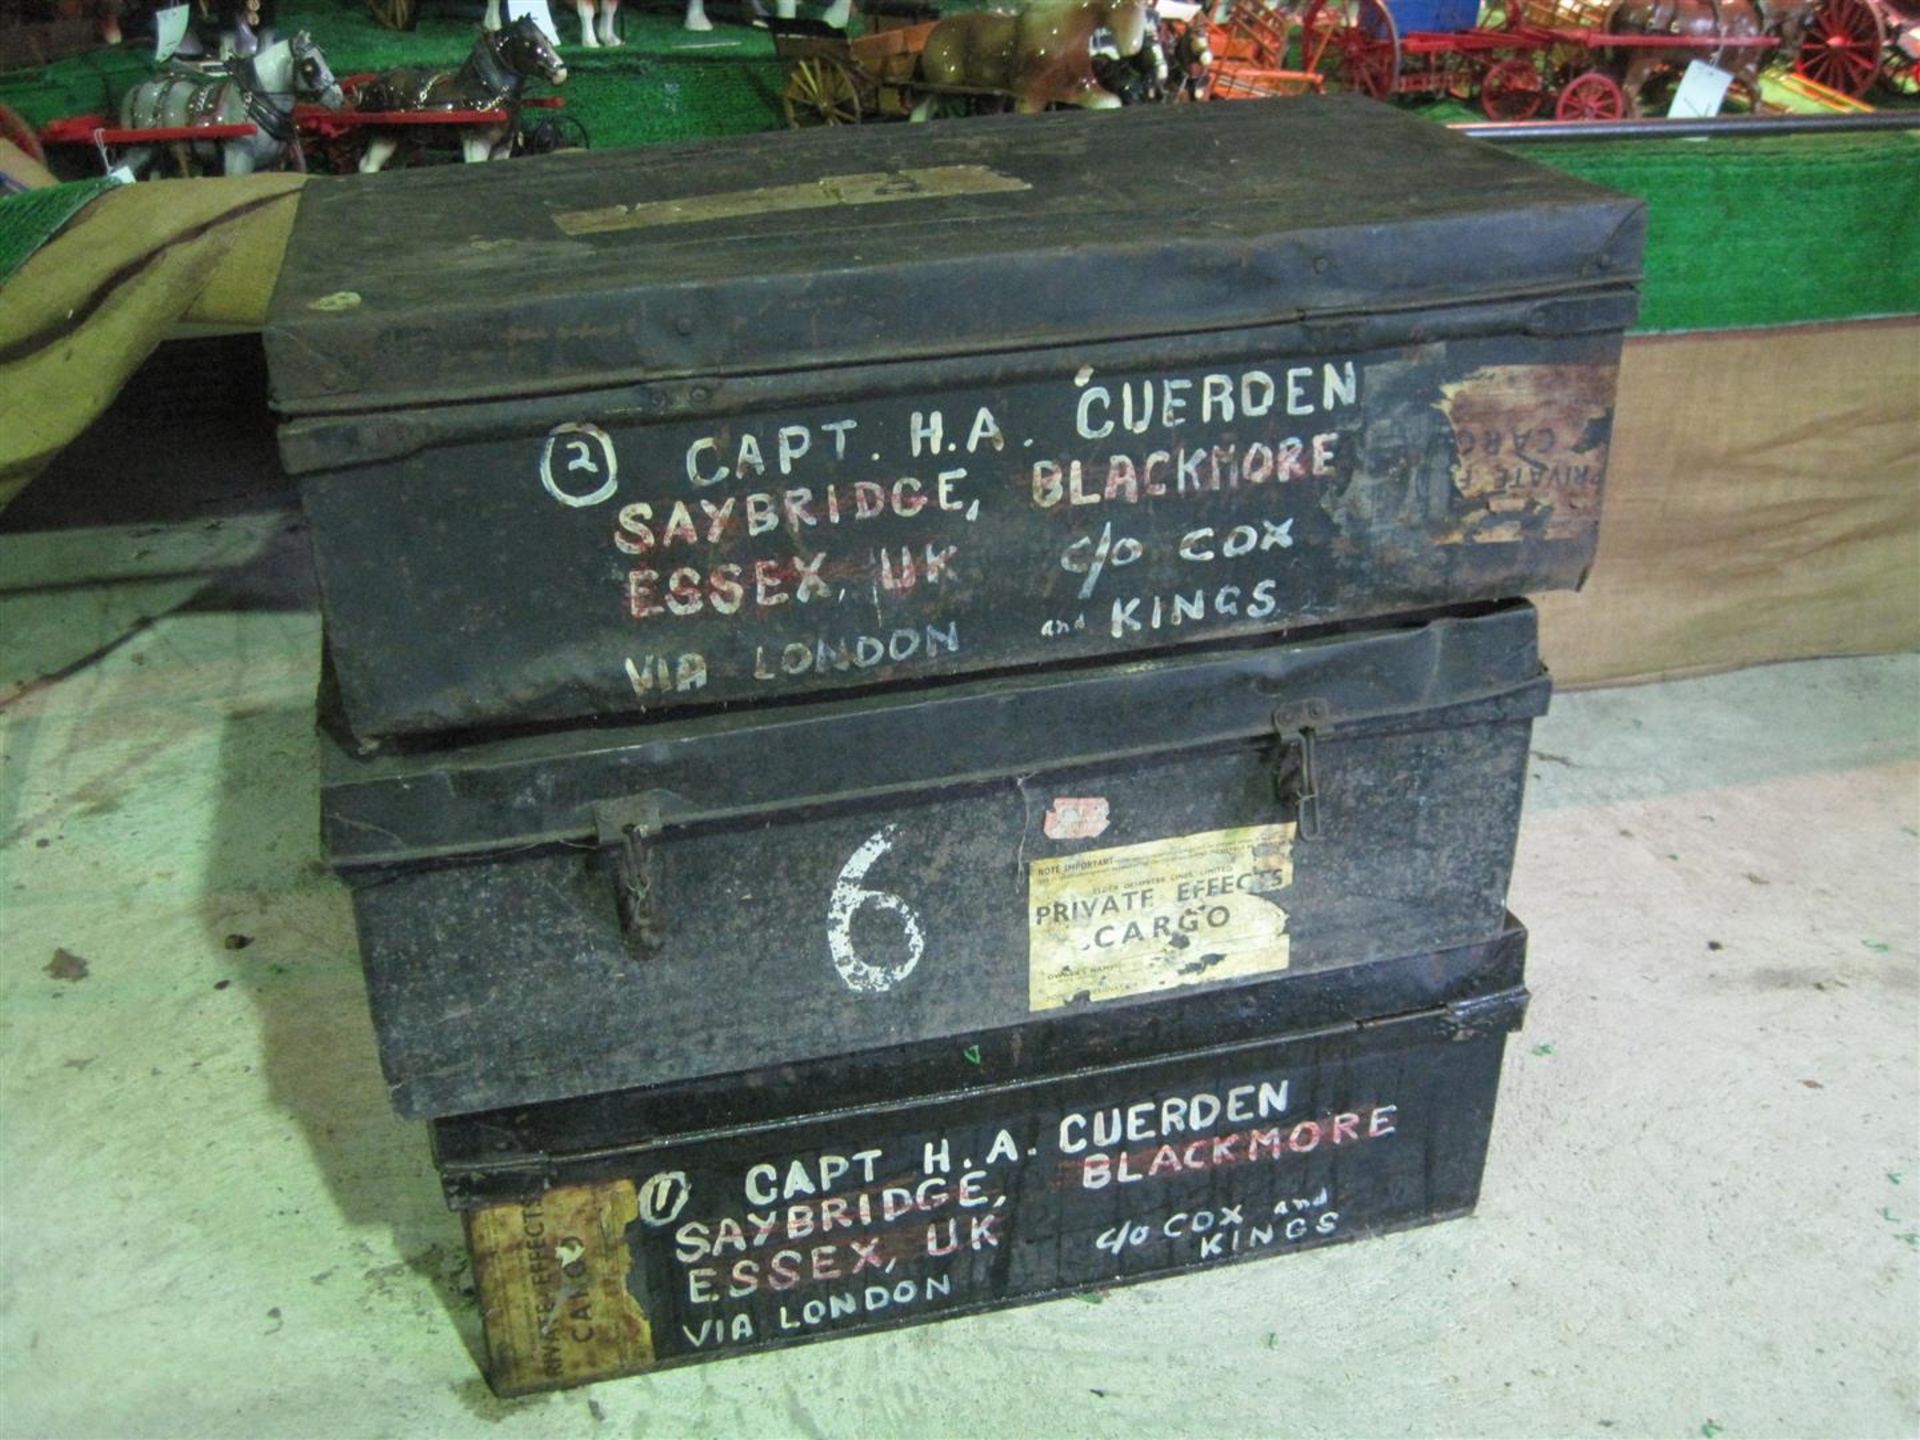 3no. Metal travelling trunks for Capt. H A Cuerden Essex